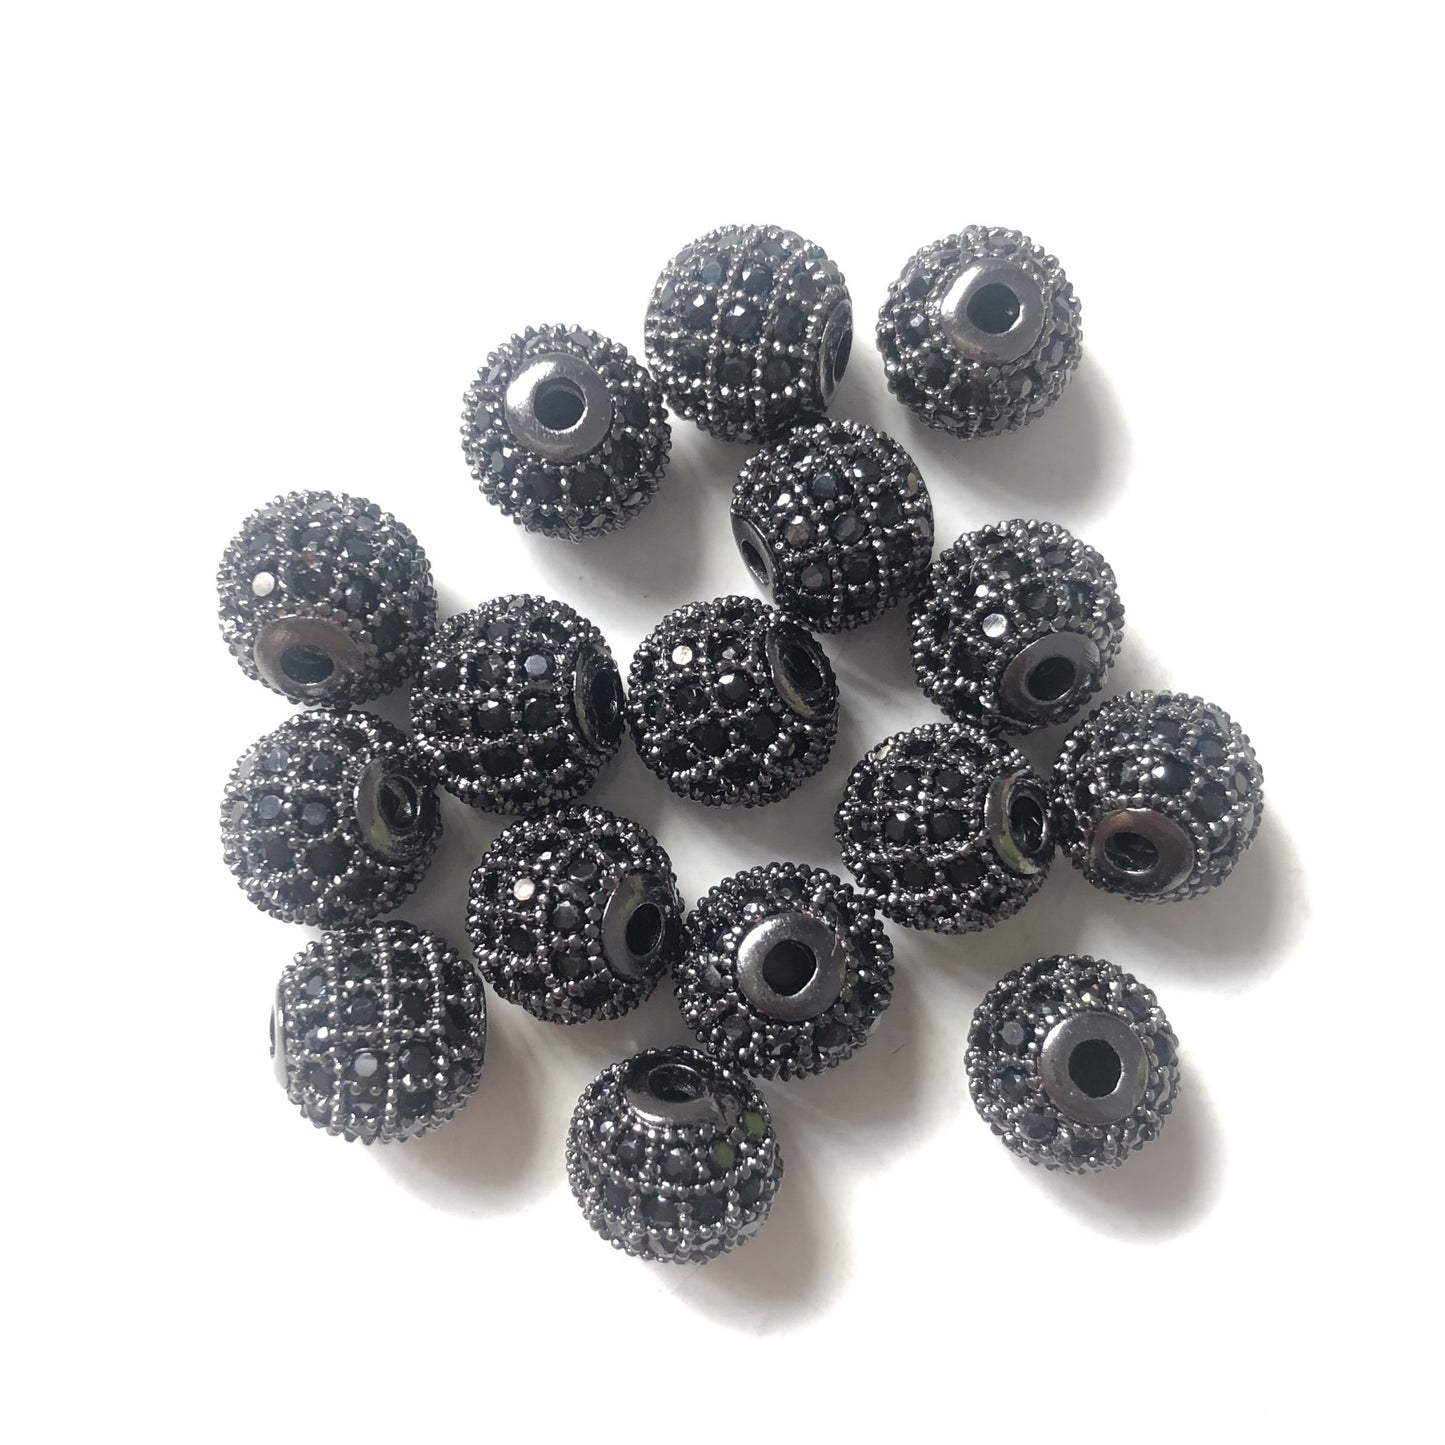 20pcs/lot 8mm CZ Paved Ball Spacers Black on Black CZ Paved Spacers 8mm Beads Ball Beads Charms Beads Beyond